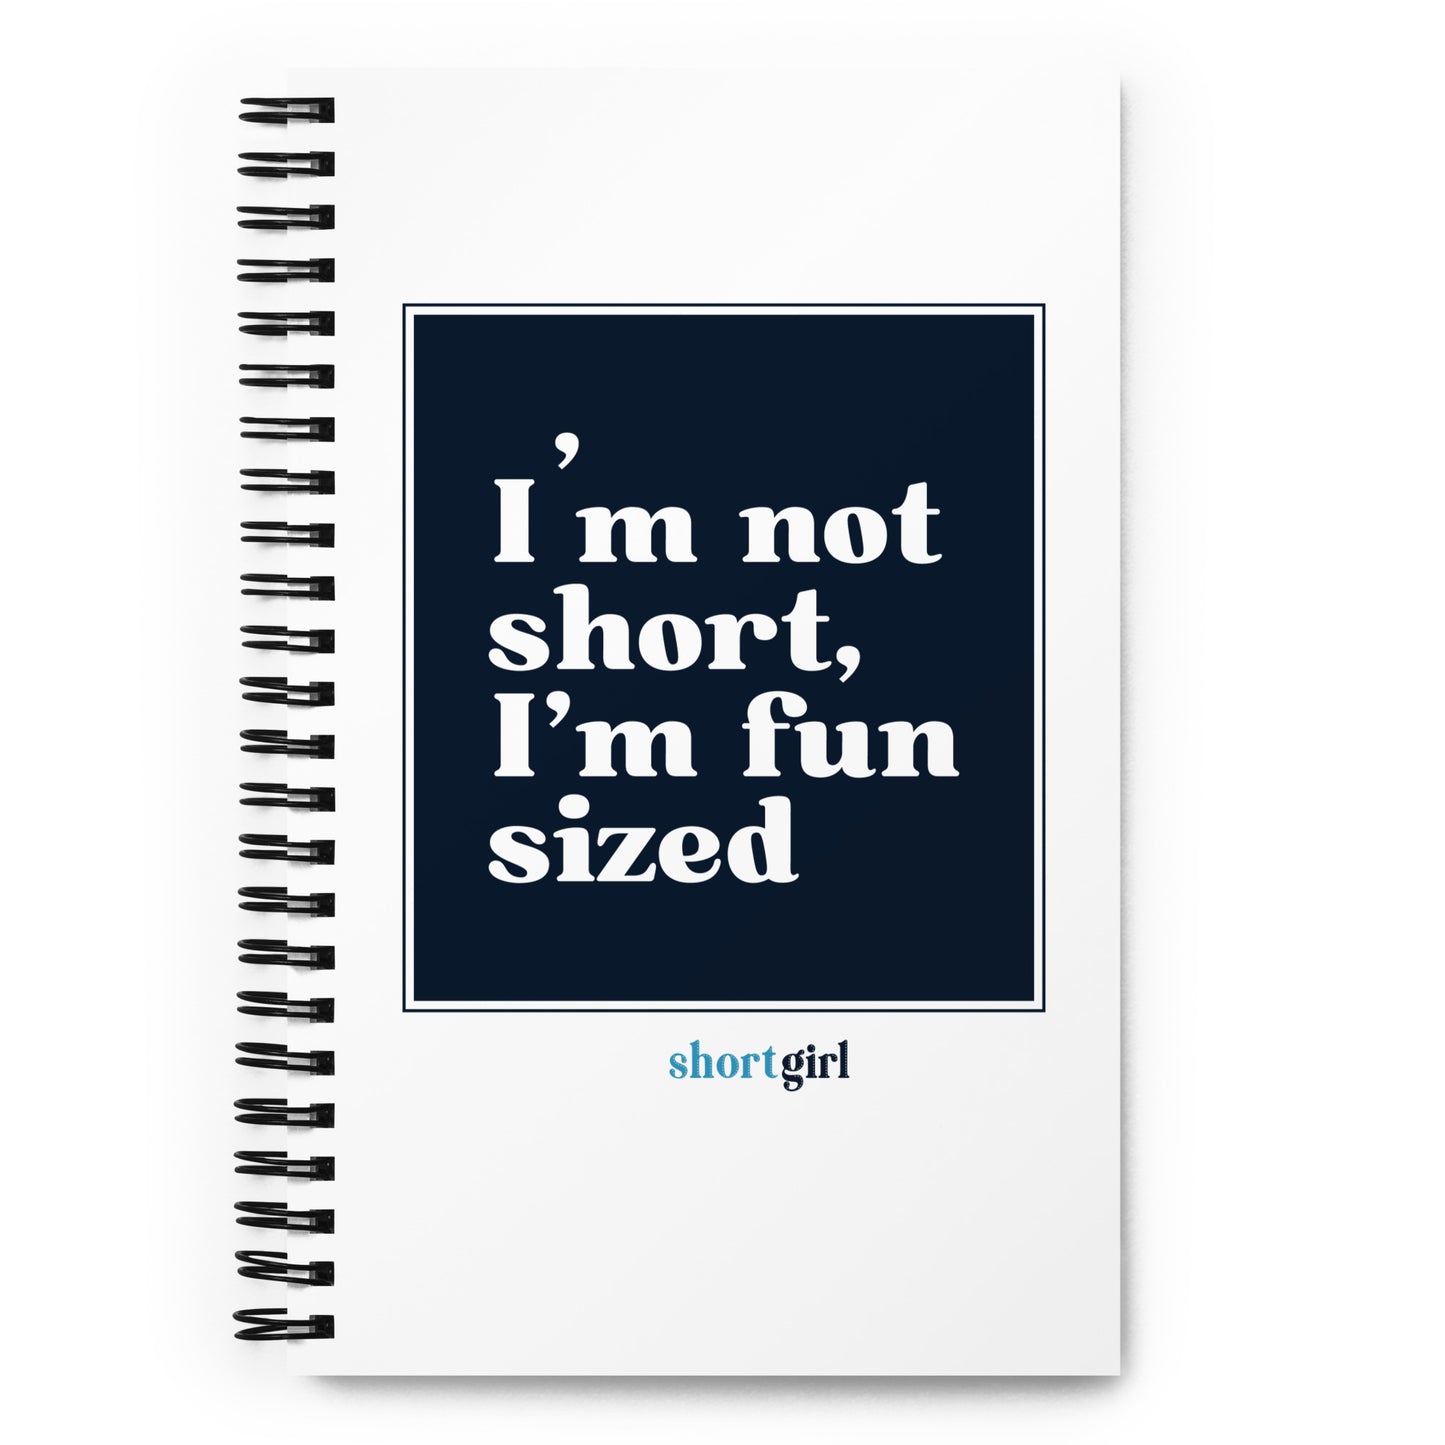 Spiral notebook - I'm not short, I'm fun sized